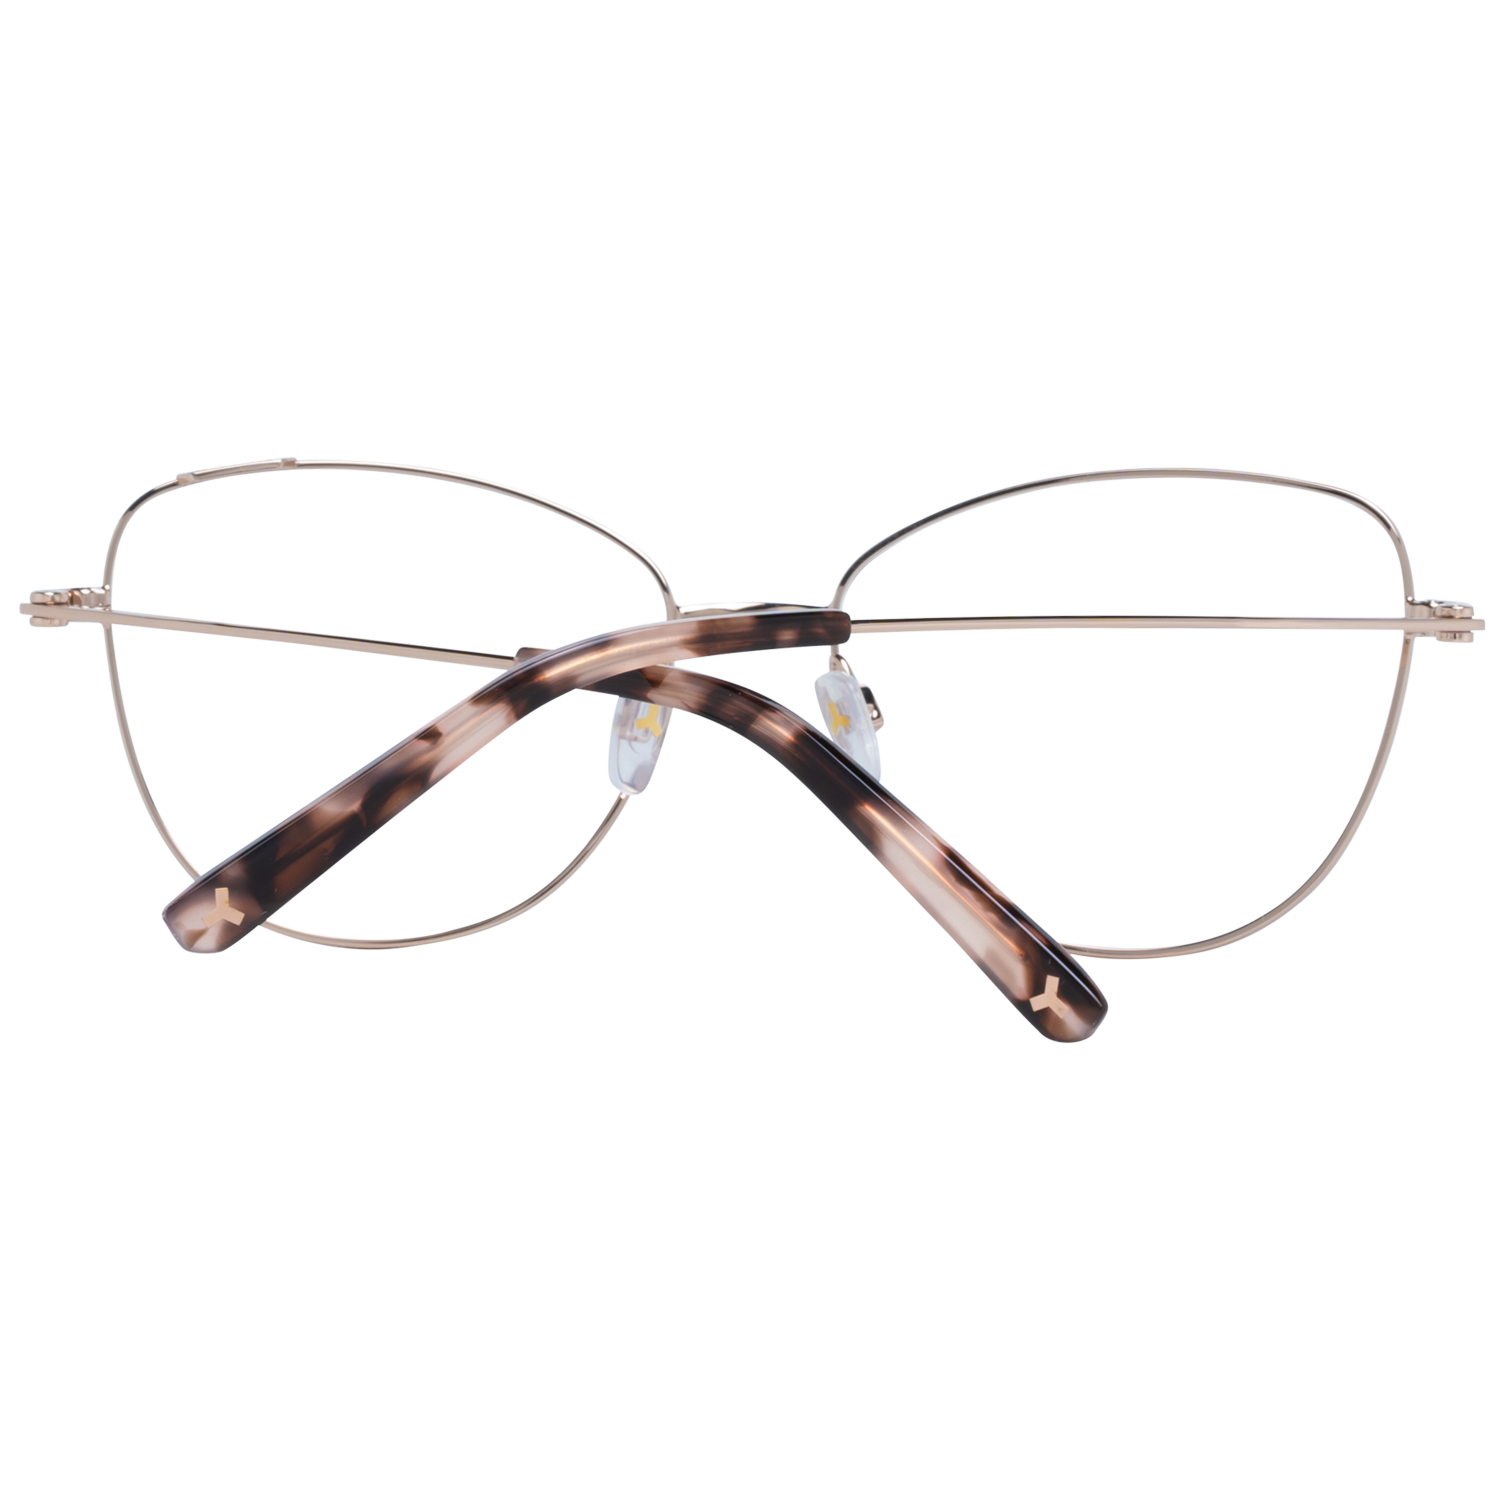 Bally Optical Frame Bally Eyeglasses Frames BY5022 071 56 Eyeglasses Eyewear UK USA Australia 